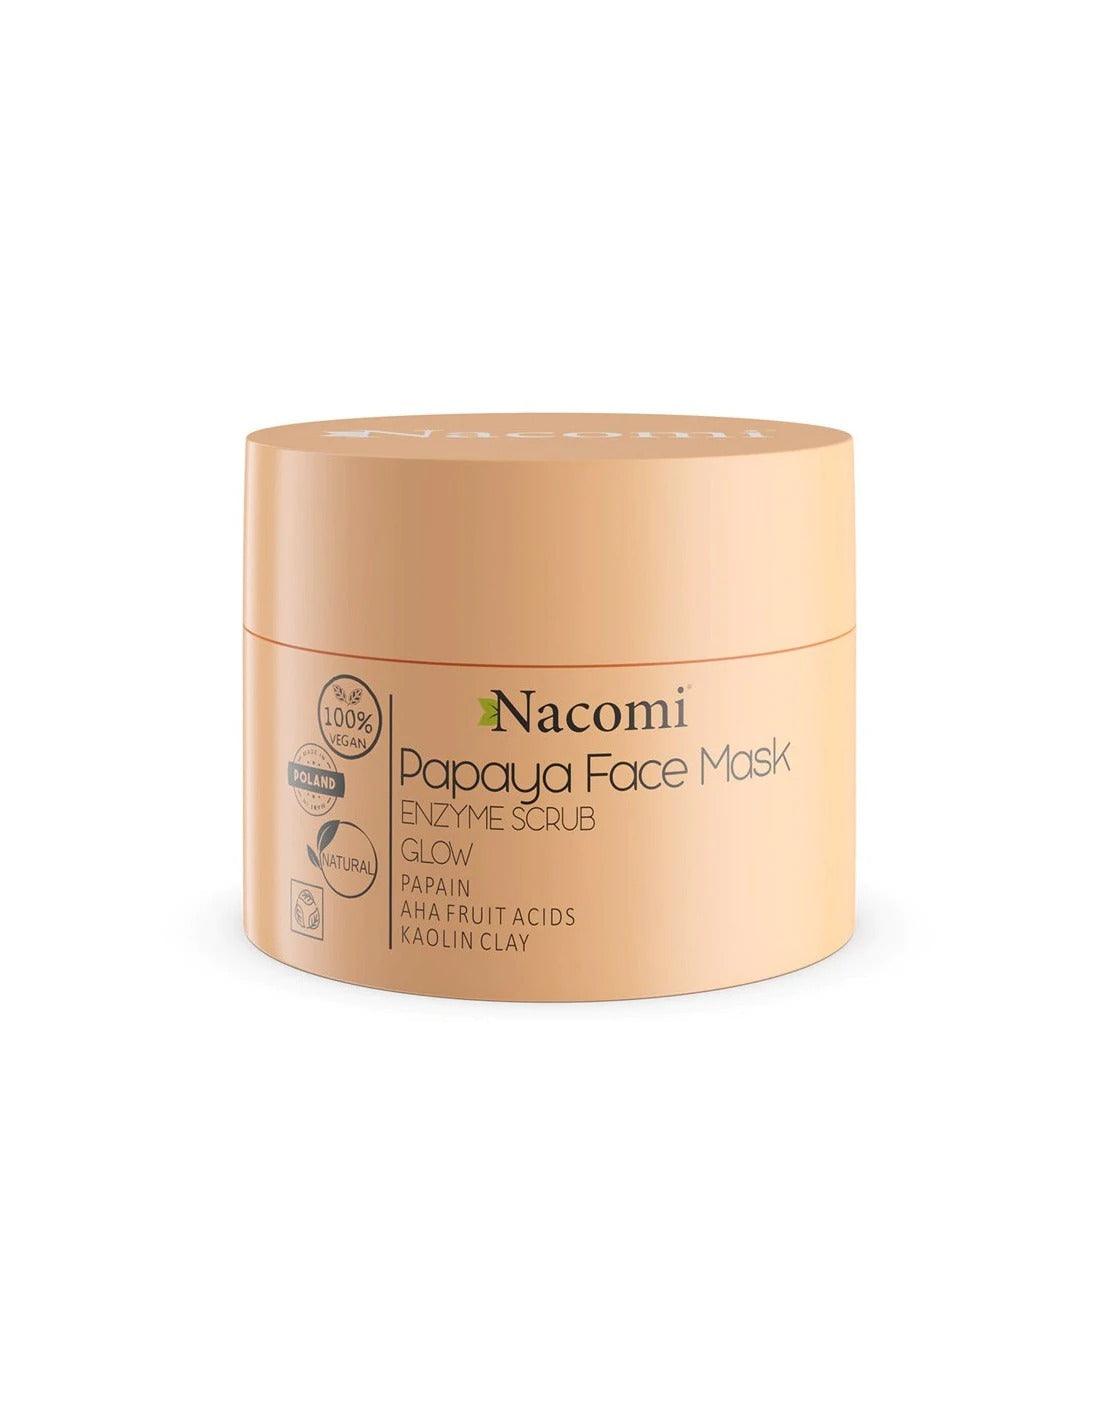 Nacomi Papaya Face Mask Enzyme Scrub 50 ml - Mrayti Store